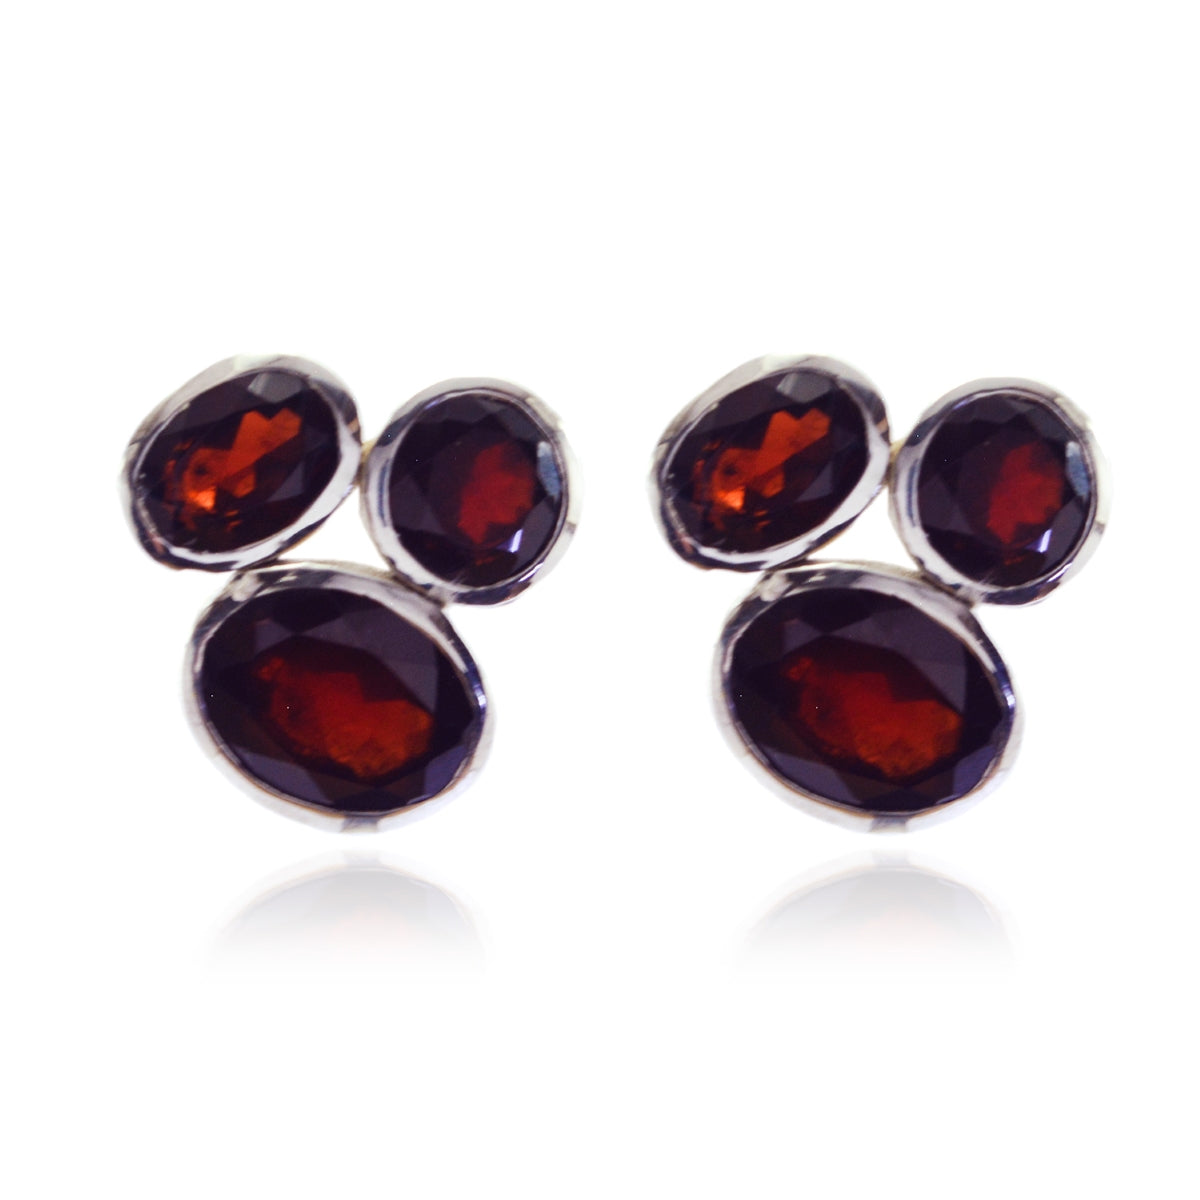 Riyo Natural Gemstone multi shape Faceted Red Garnet Silver Earring gift for easter Sunday